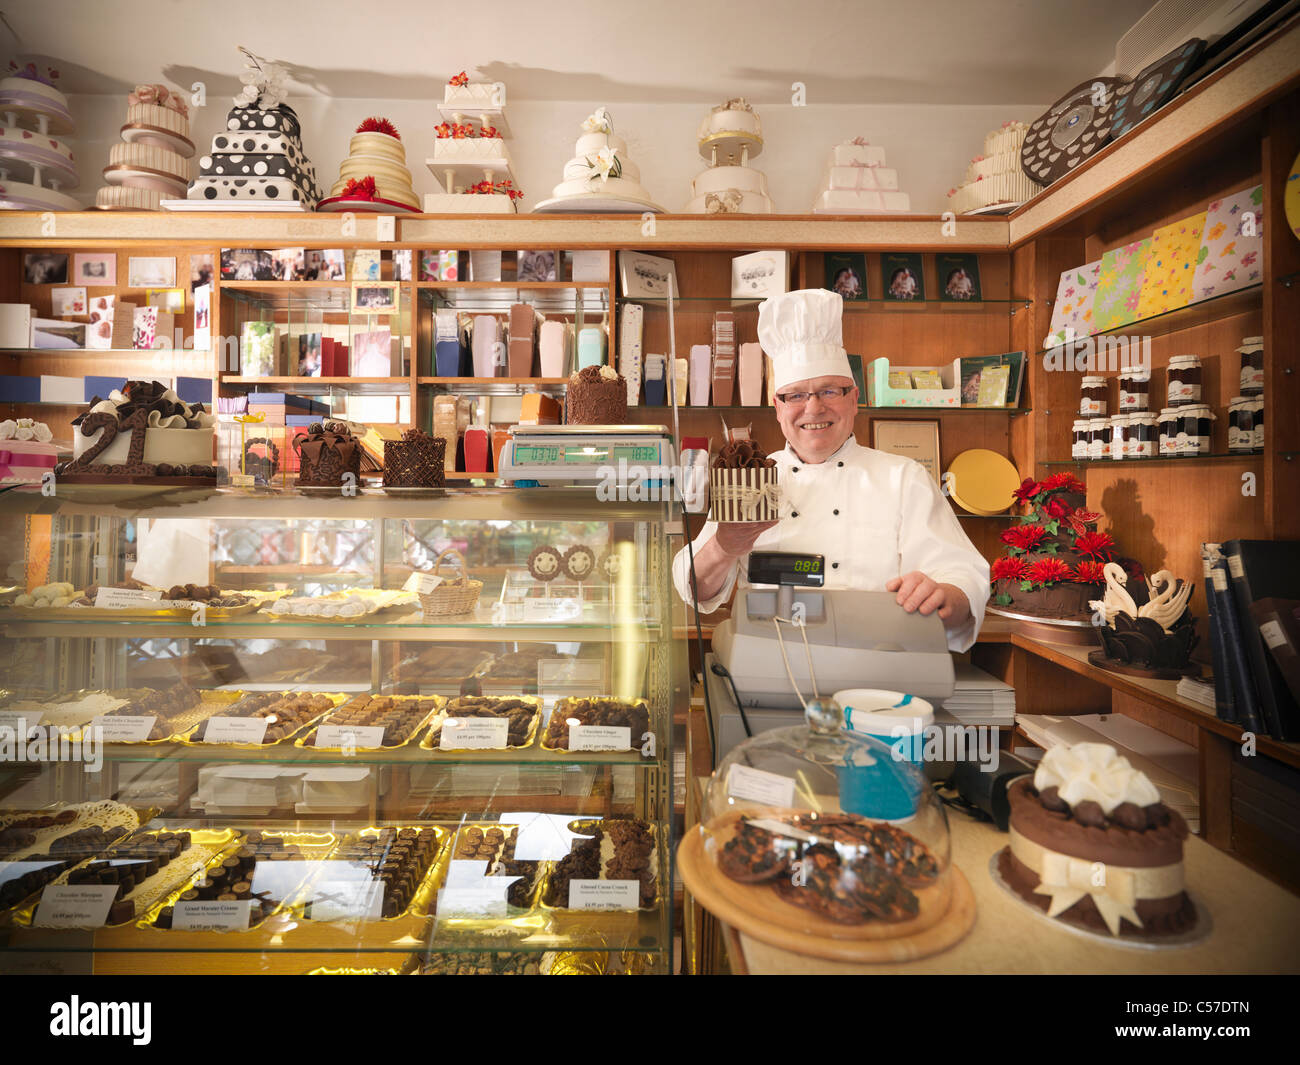 Baker at register in cake shop Stock Photo